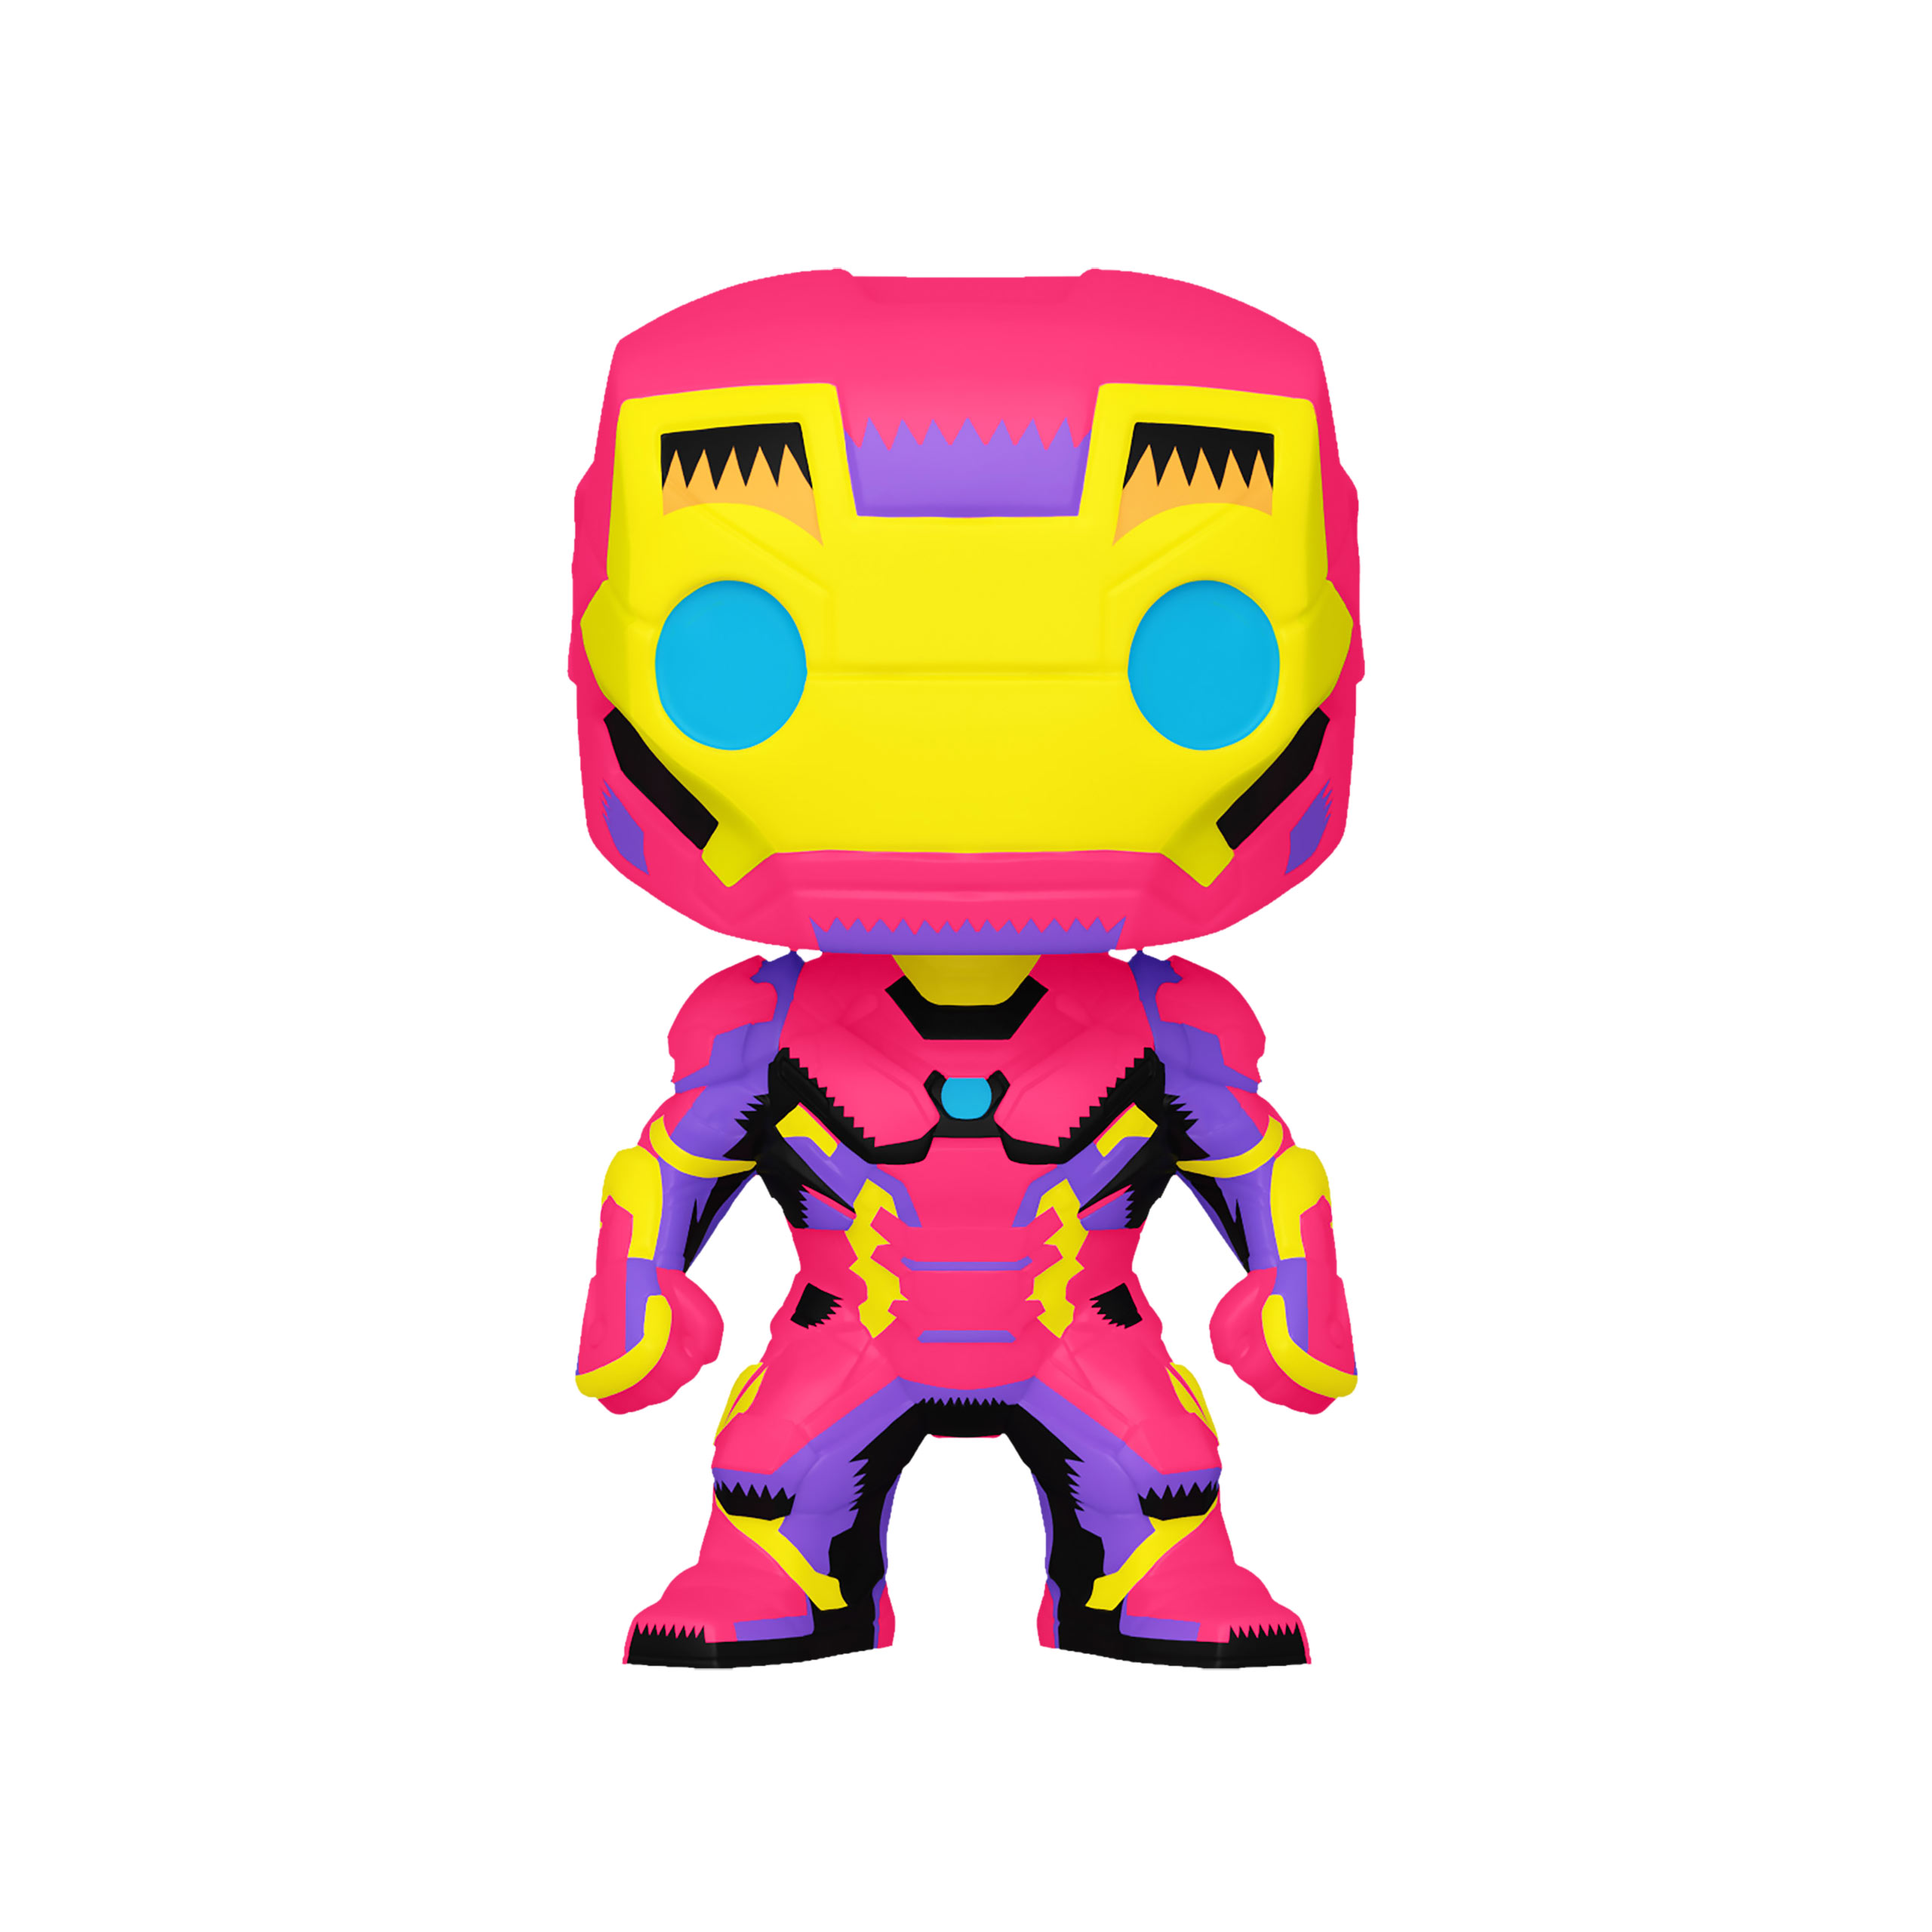 Iron Man - Funko Pop Black Light Glow Bobblehead Figure